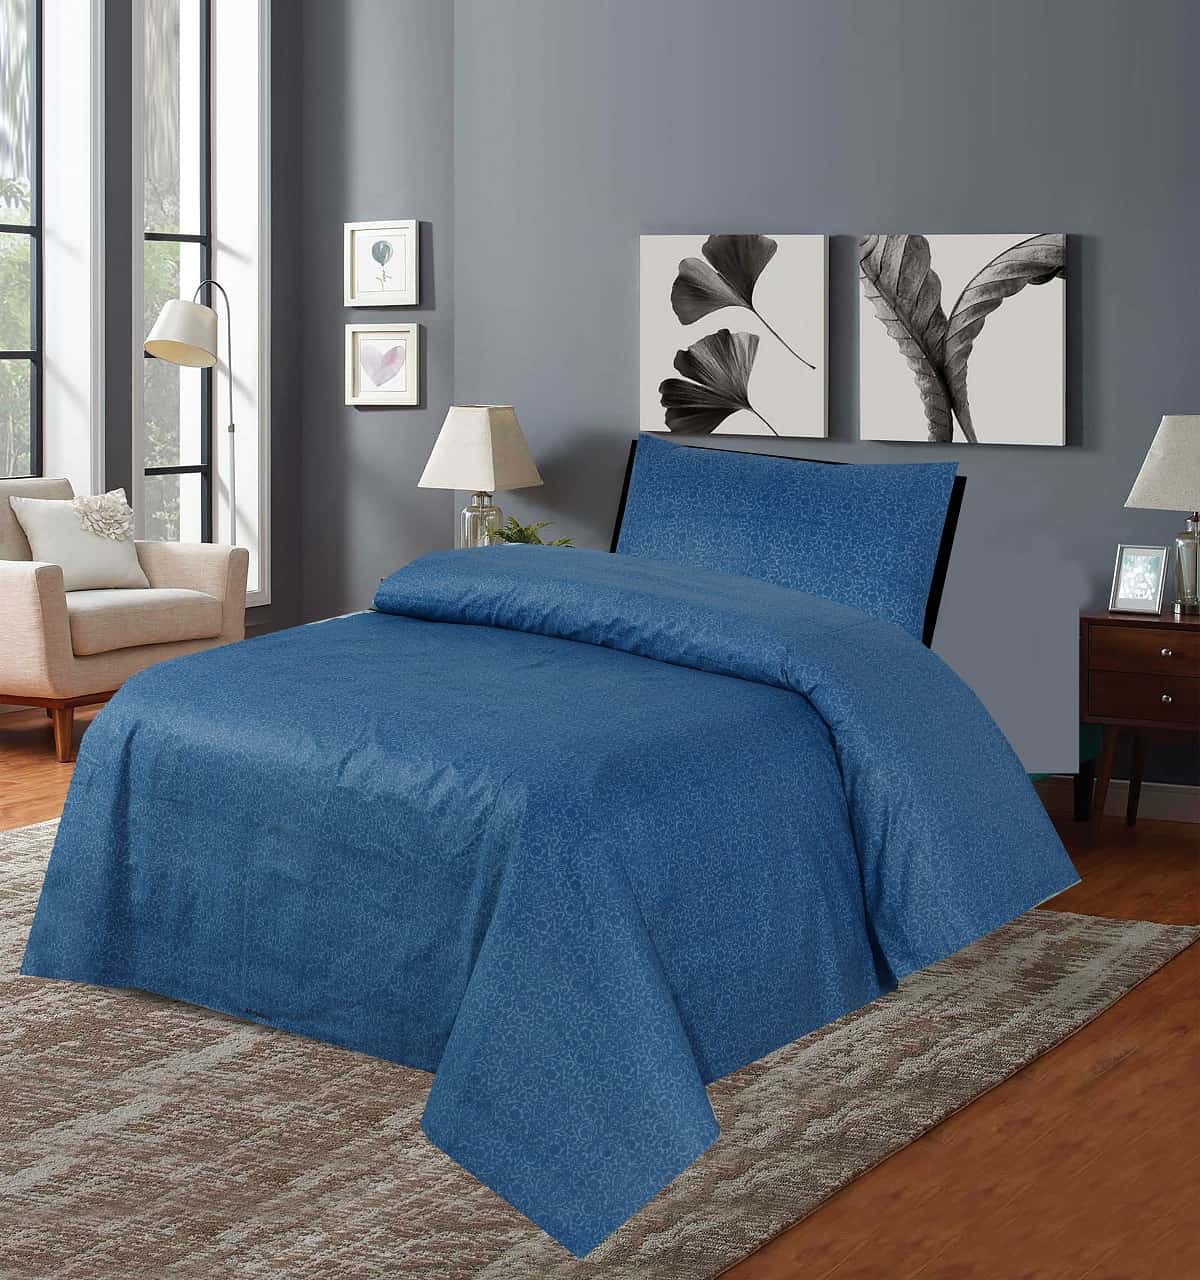 Single Bedsheet Design 0113